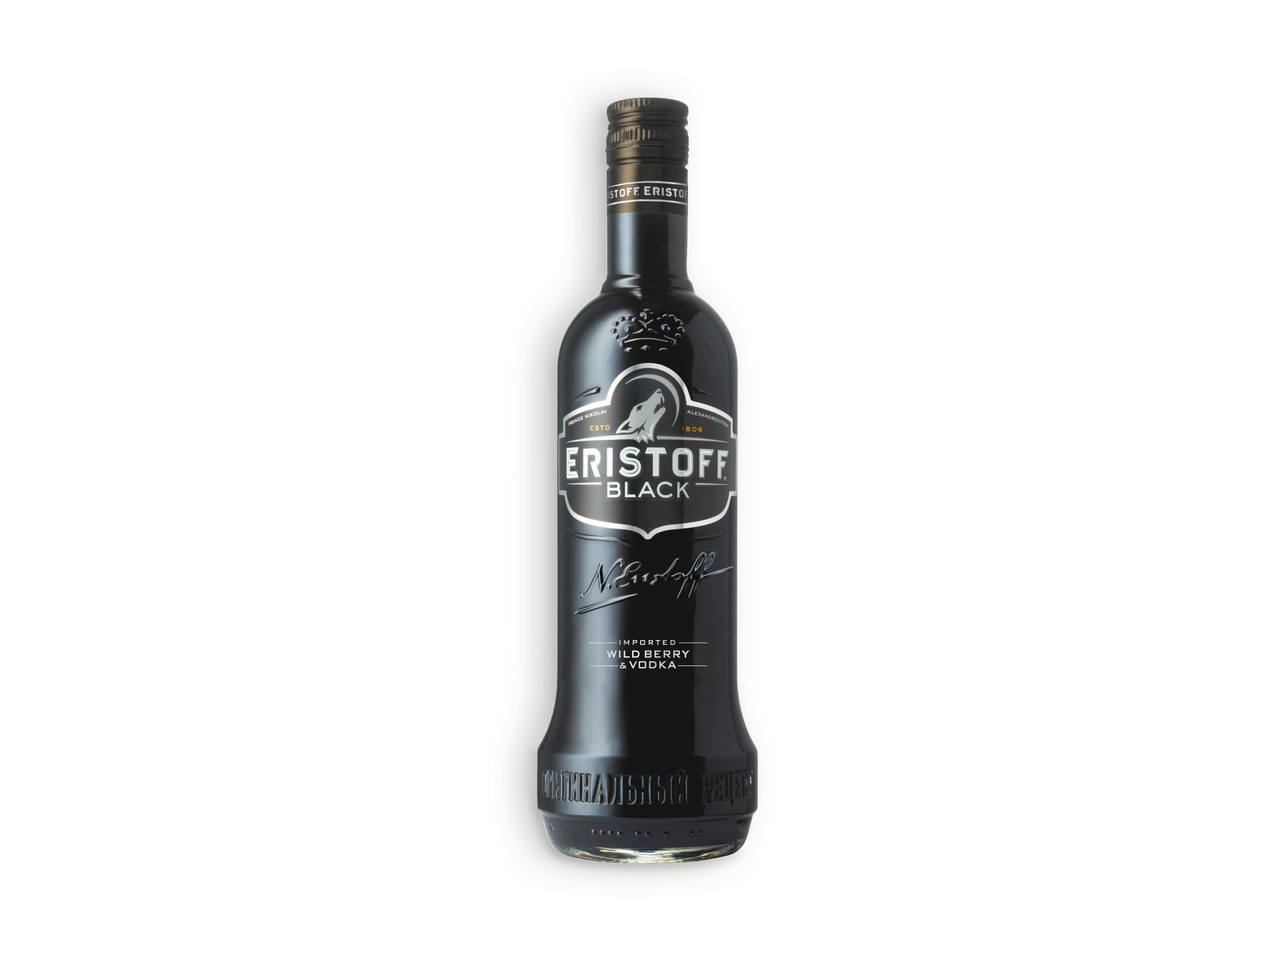 ERISTOFF(R) Vodka Black